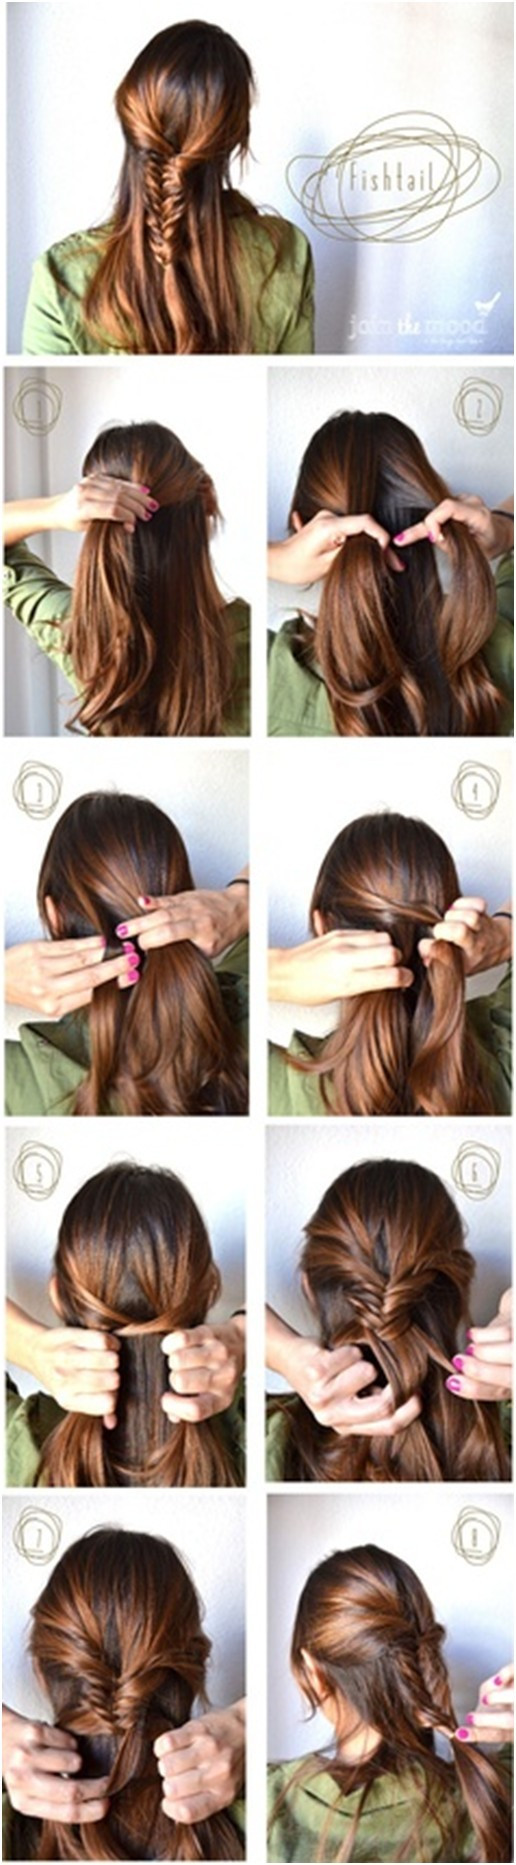 DIY Braid Hair
 Fishtail Braided Hairstyles Tutorials Trendy Hairstyles